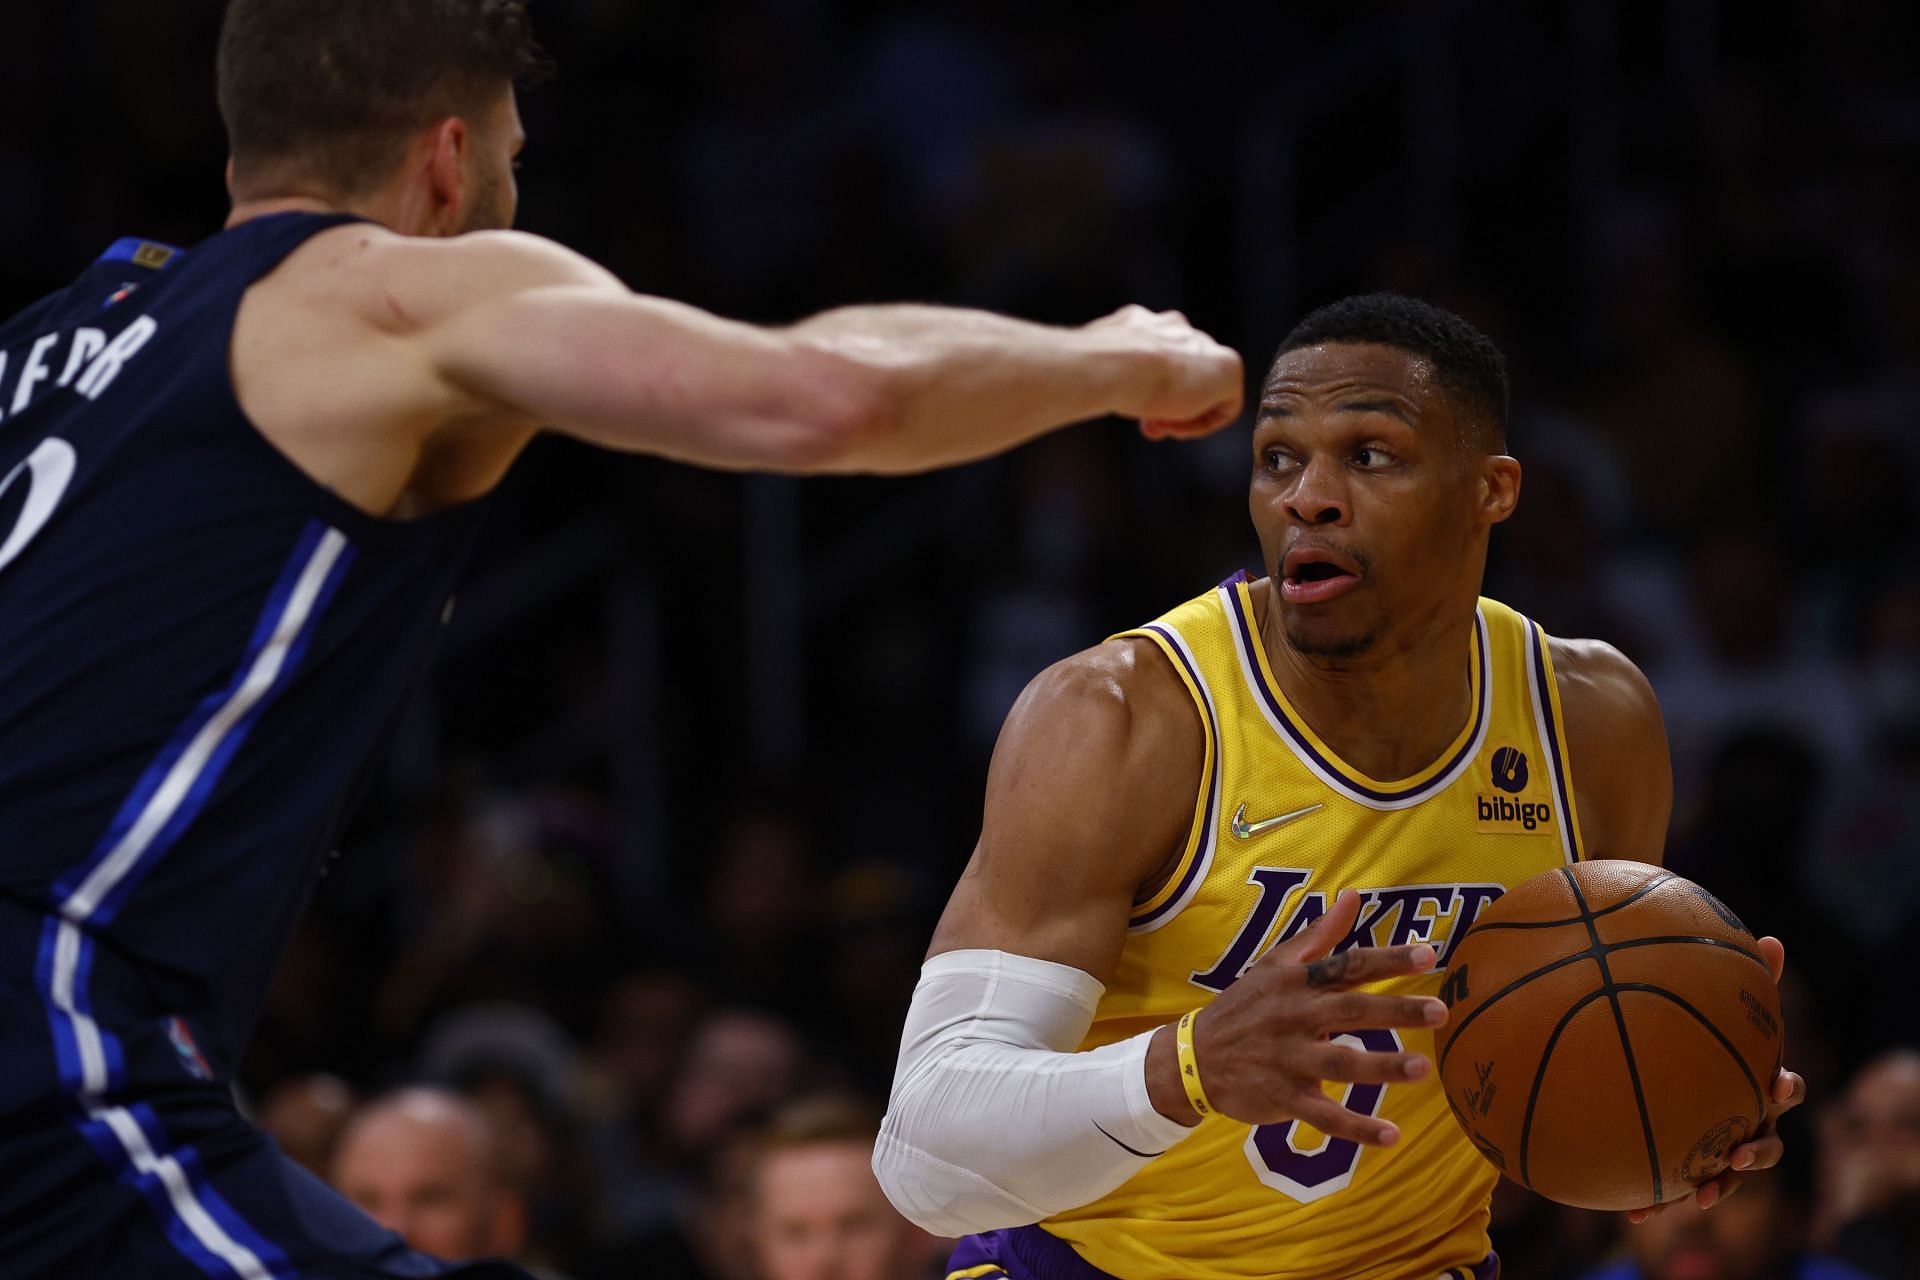 The Dallas Mavericks will host the LA Lakers on Mar. 29.